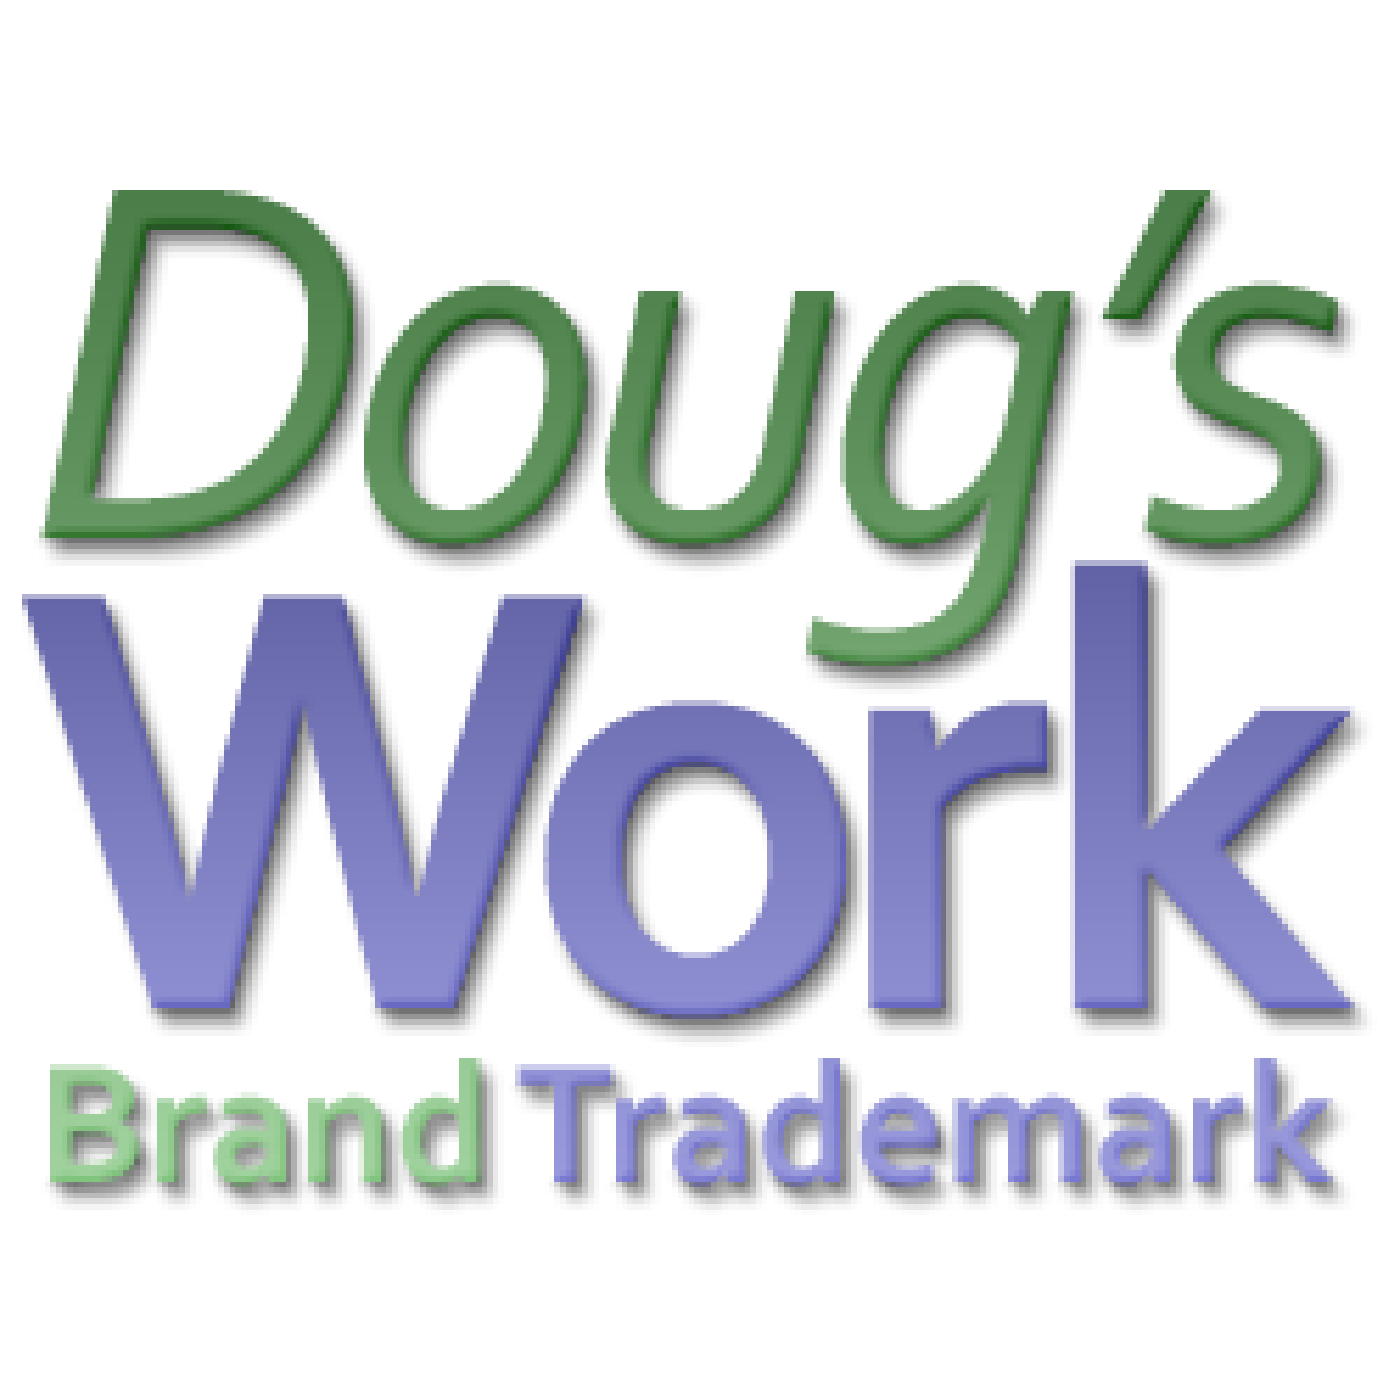 Doug's Work - Brand Trademark